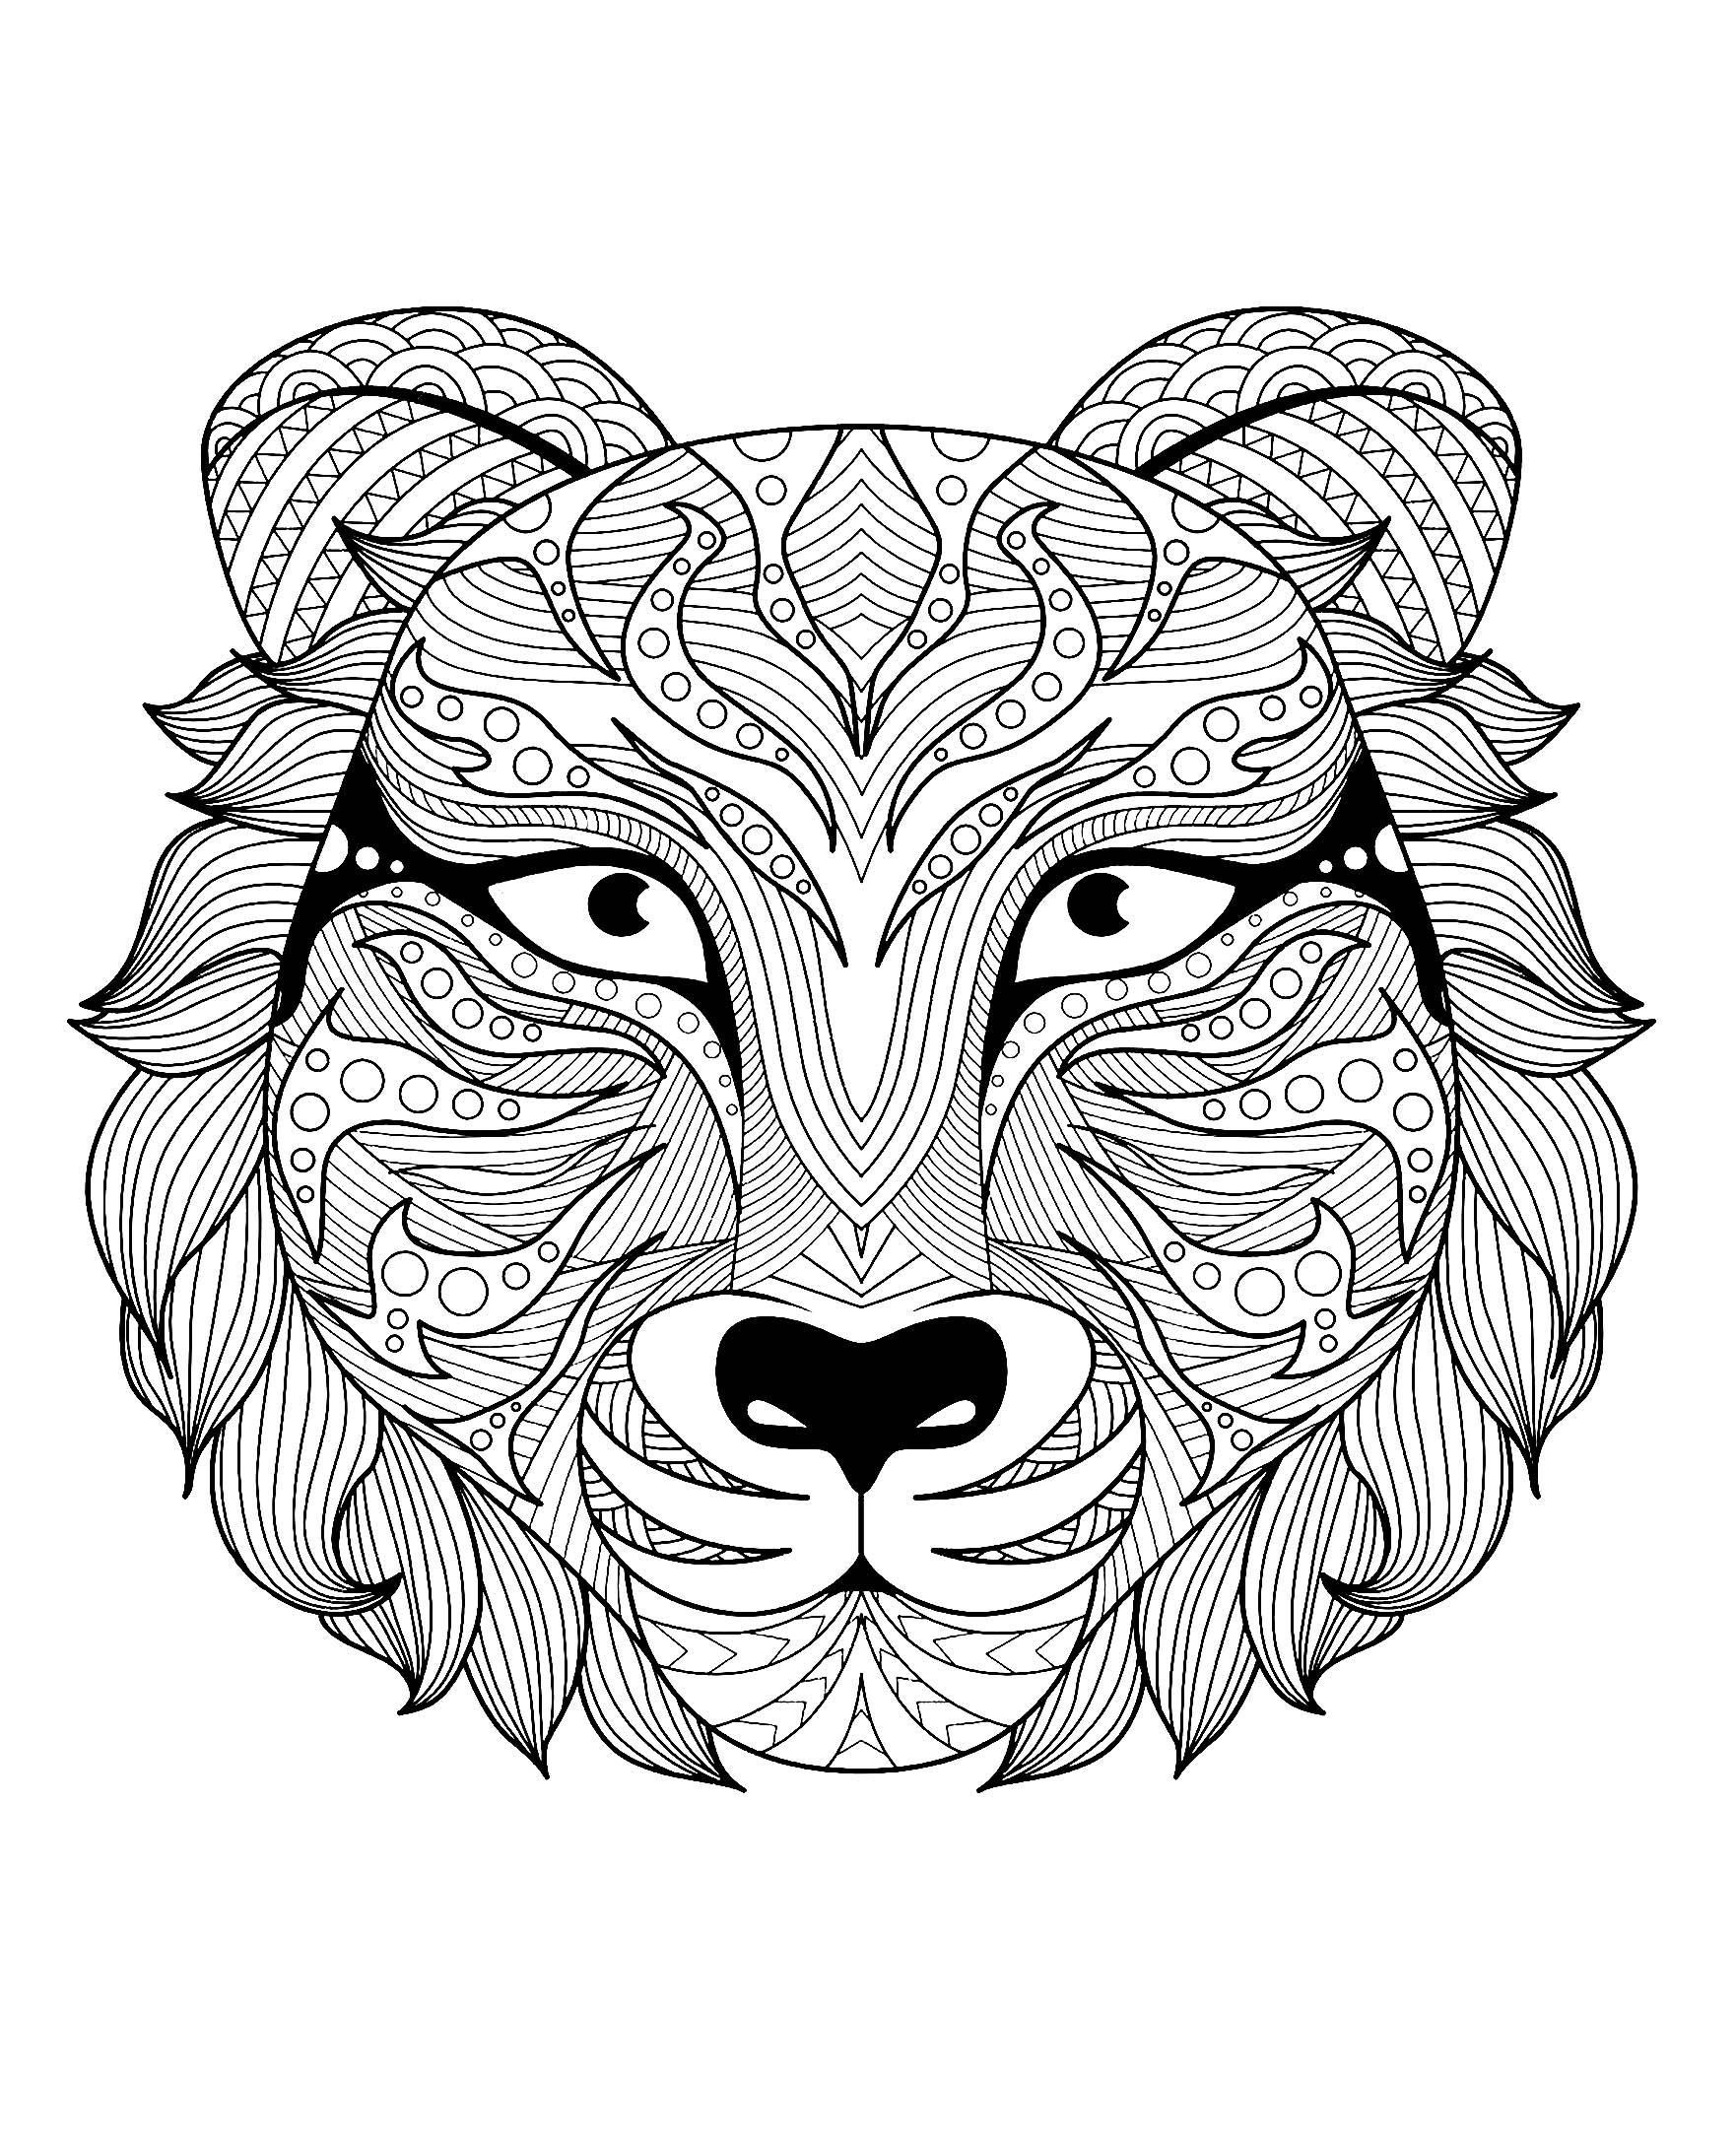 Linda cabeça de tigre, Artista : Bimdeedee   Fonte : 123rf